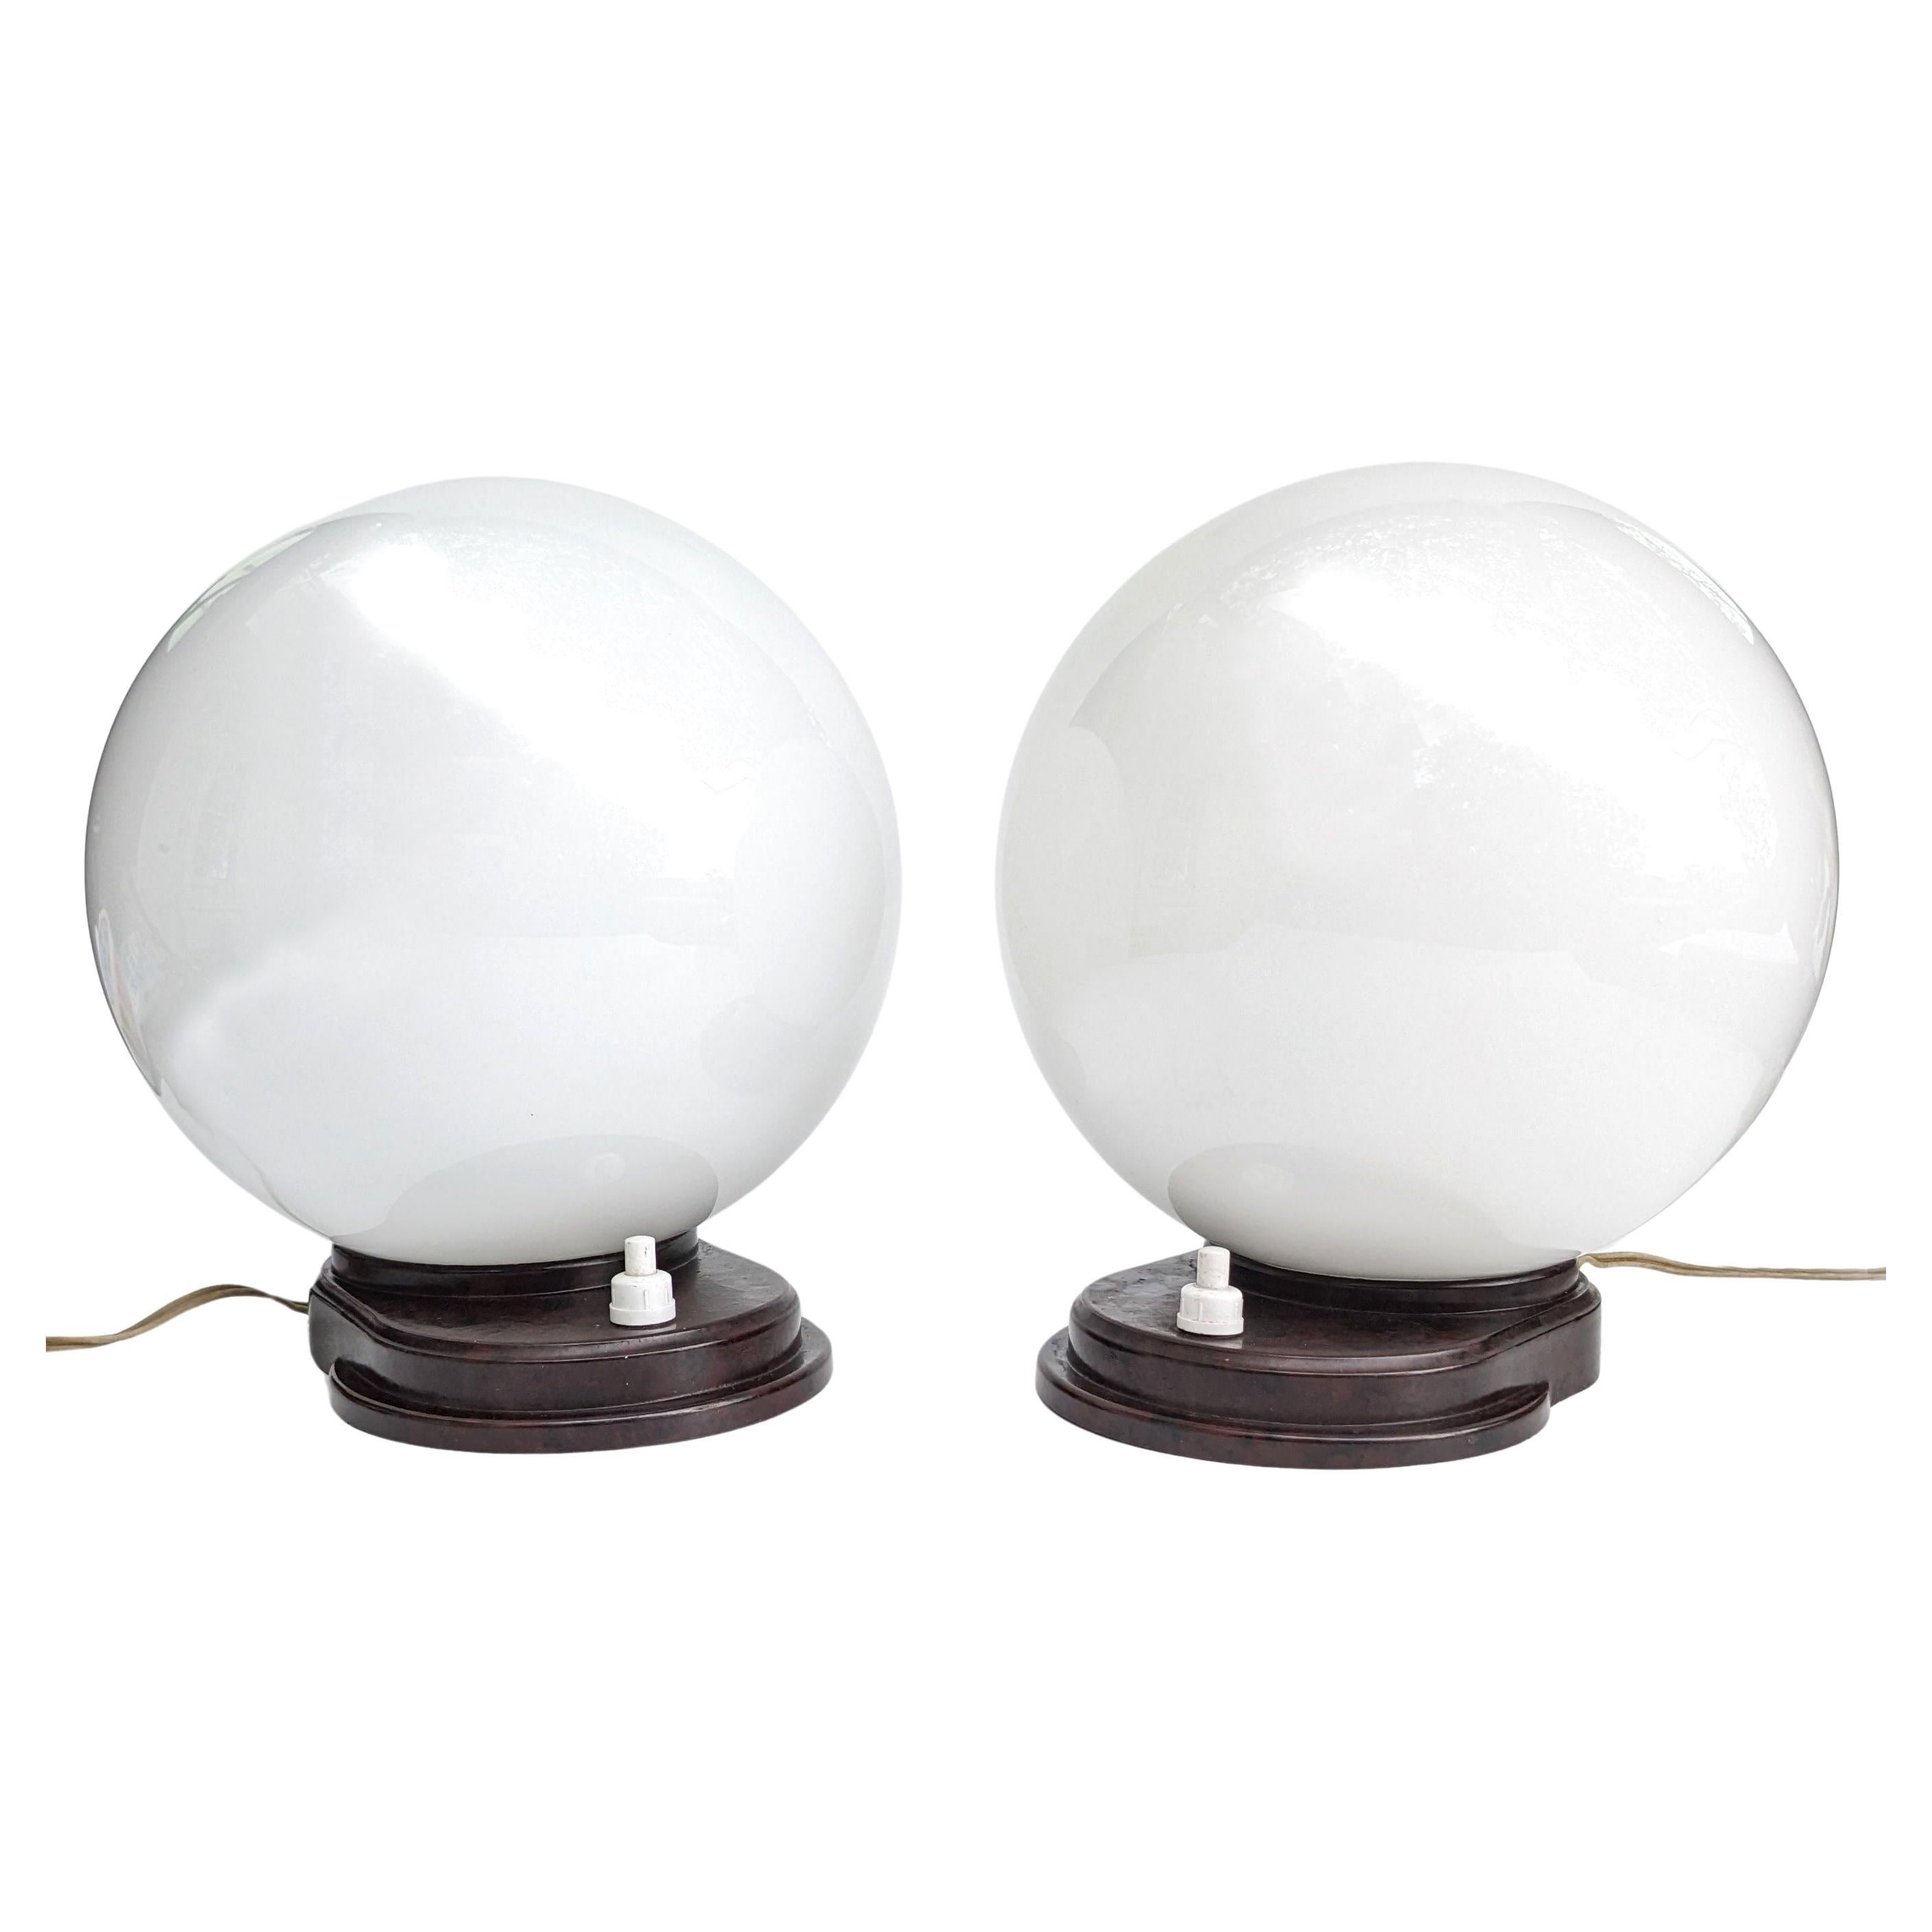 Art Deco Matching Pair of Modernist Bakelite Table Lamps, c1930